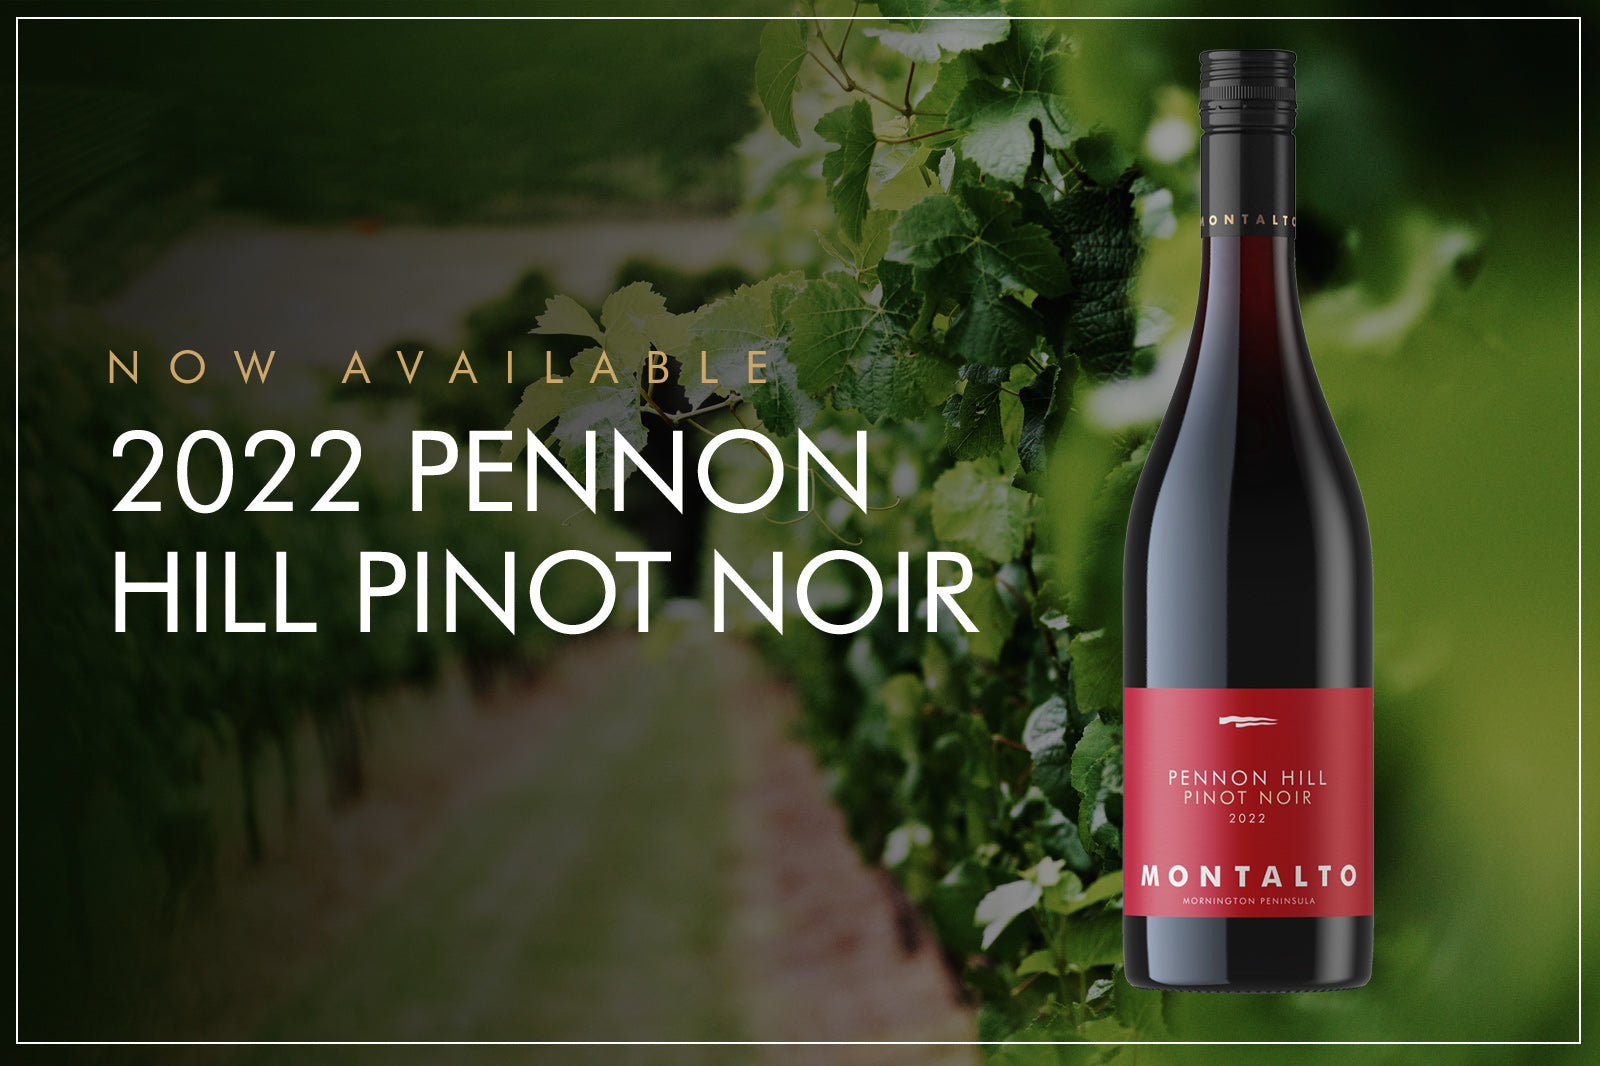 2022 Pennon Hill Pinot Noir Awards